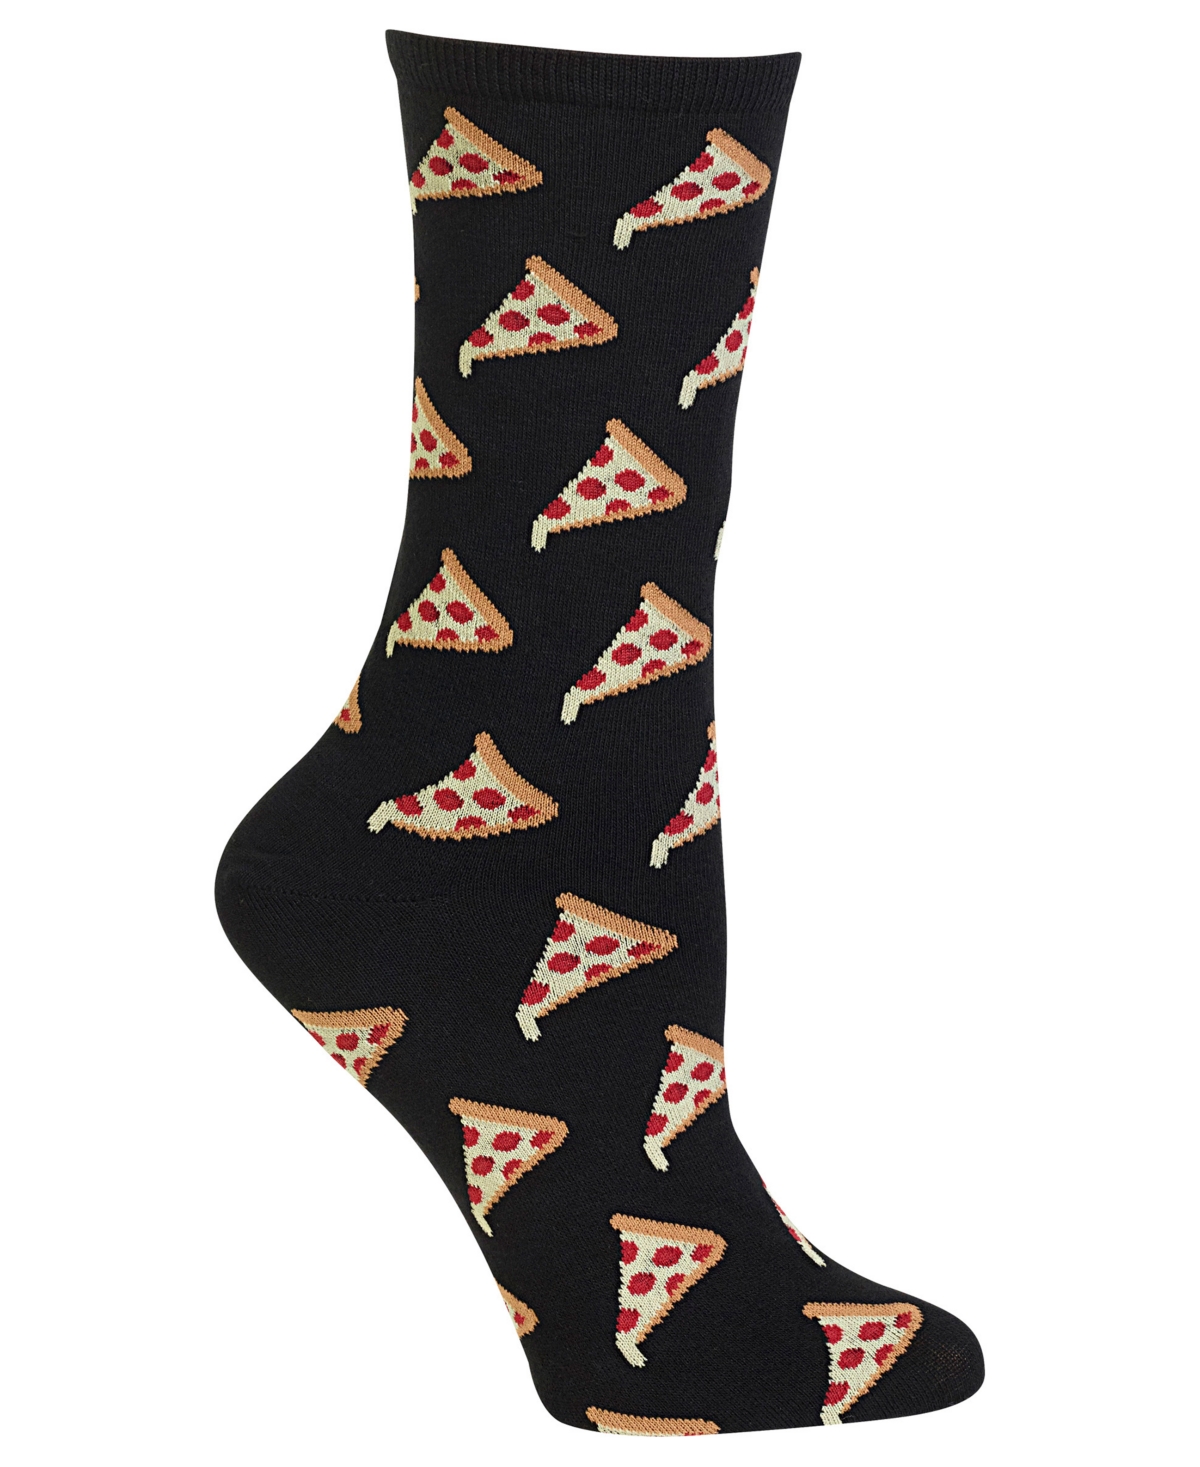 Hot Sox Women's Pizza Fashion Crew Socks